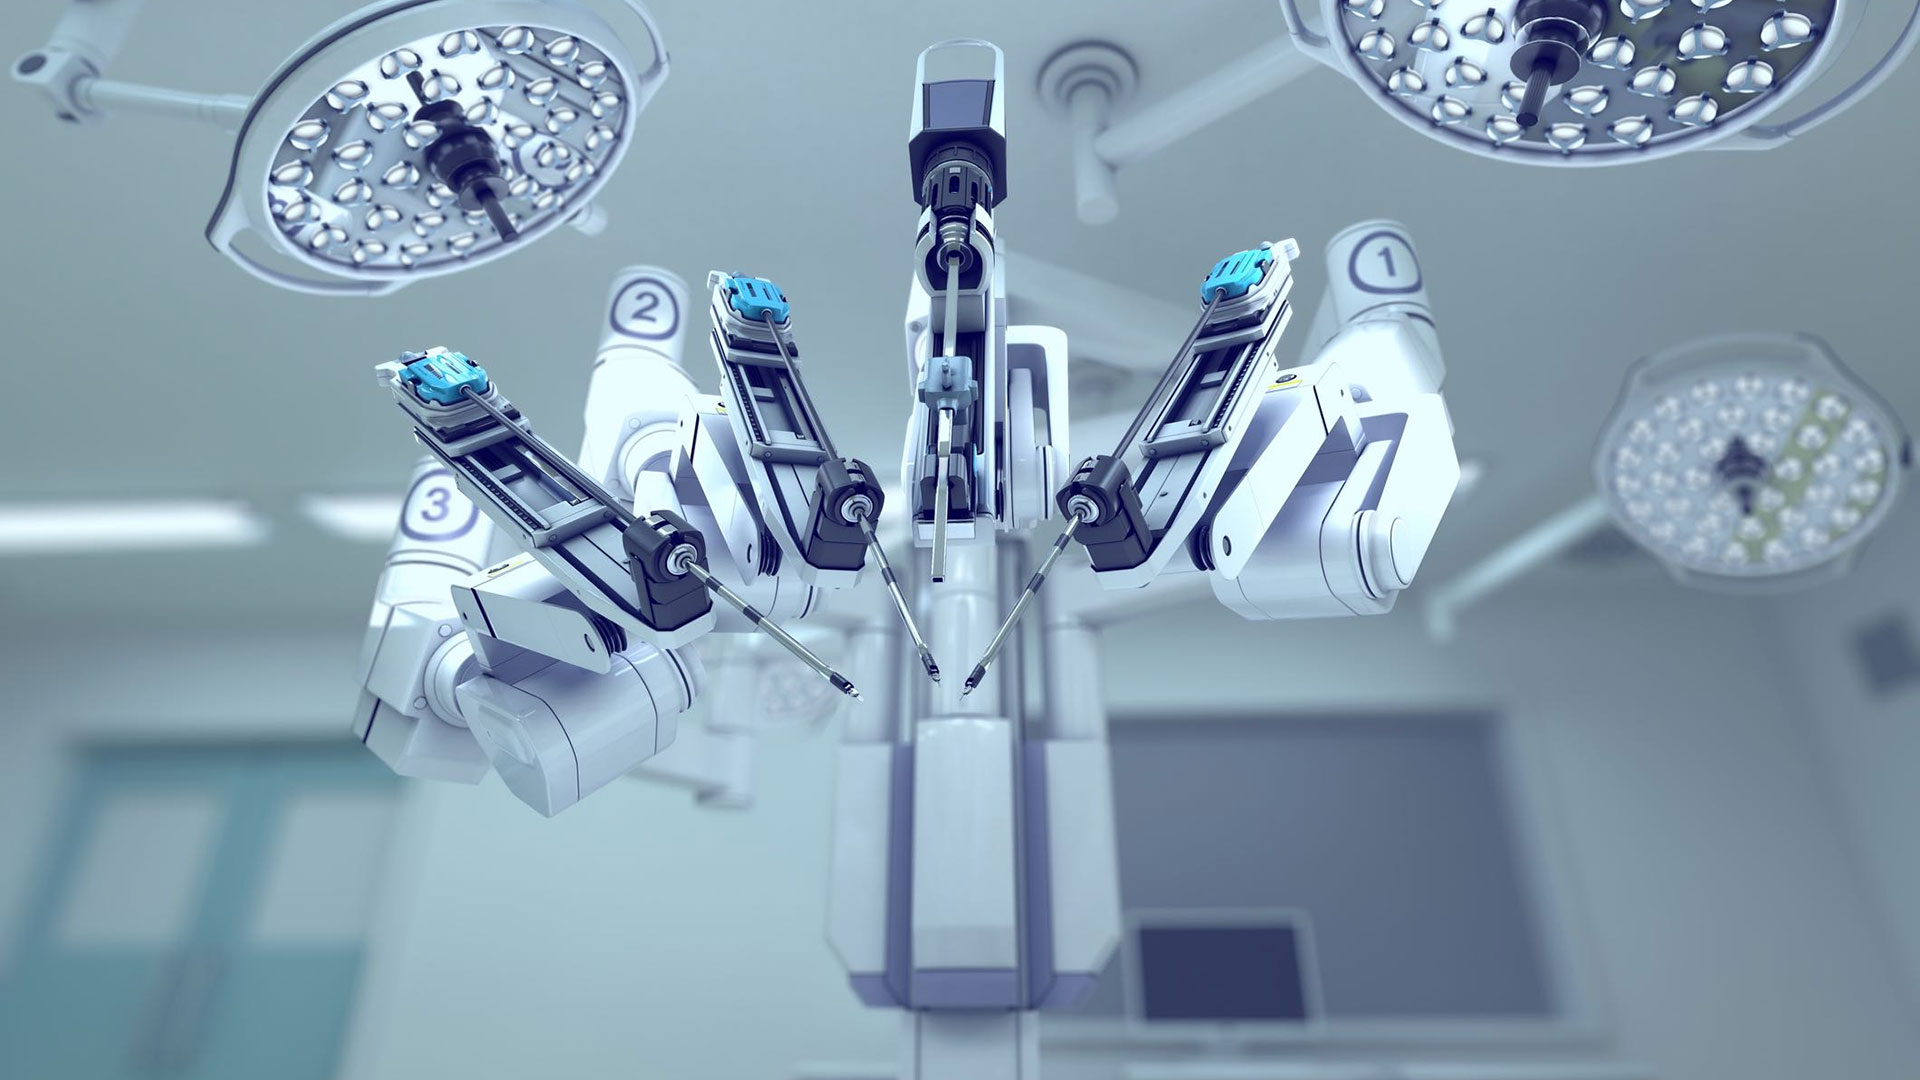 Robotik Cerrahi